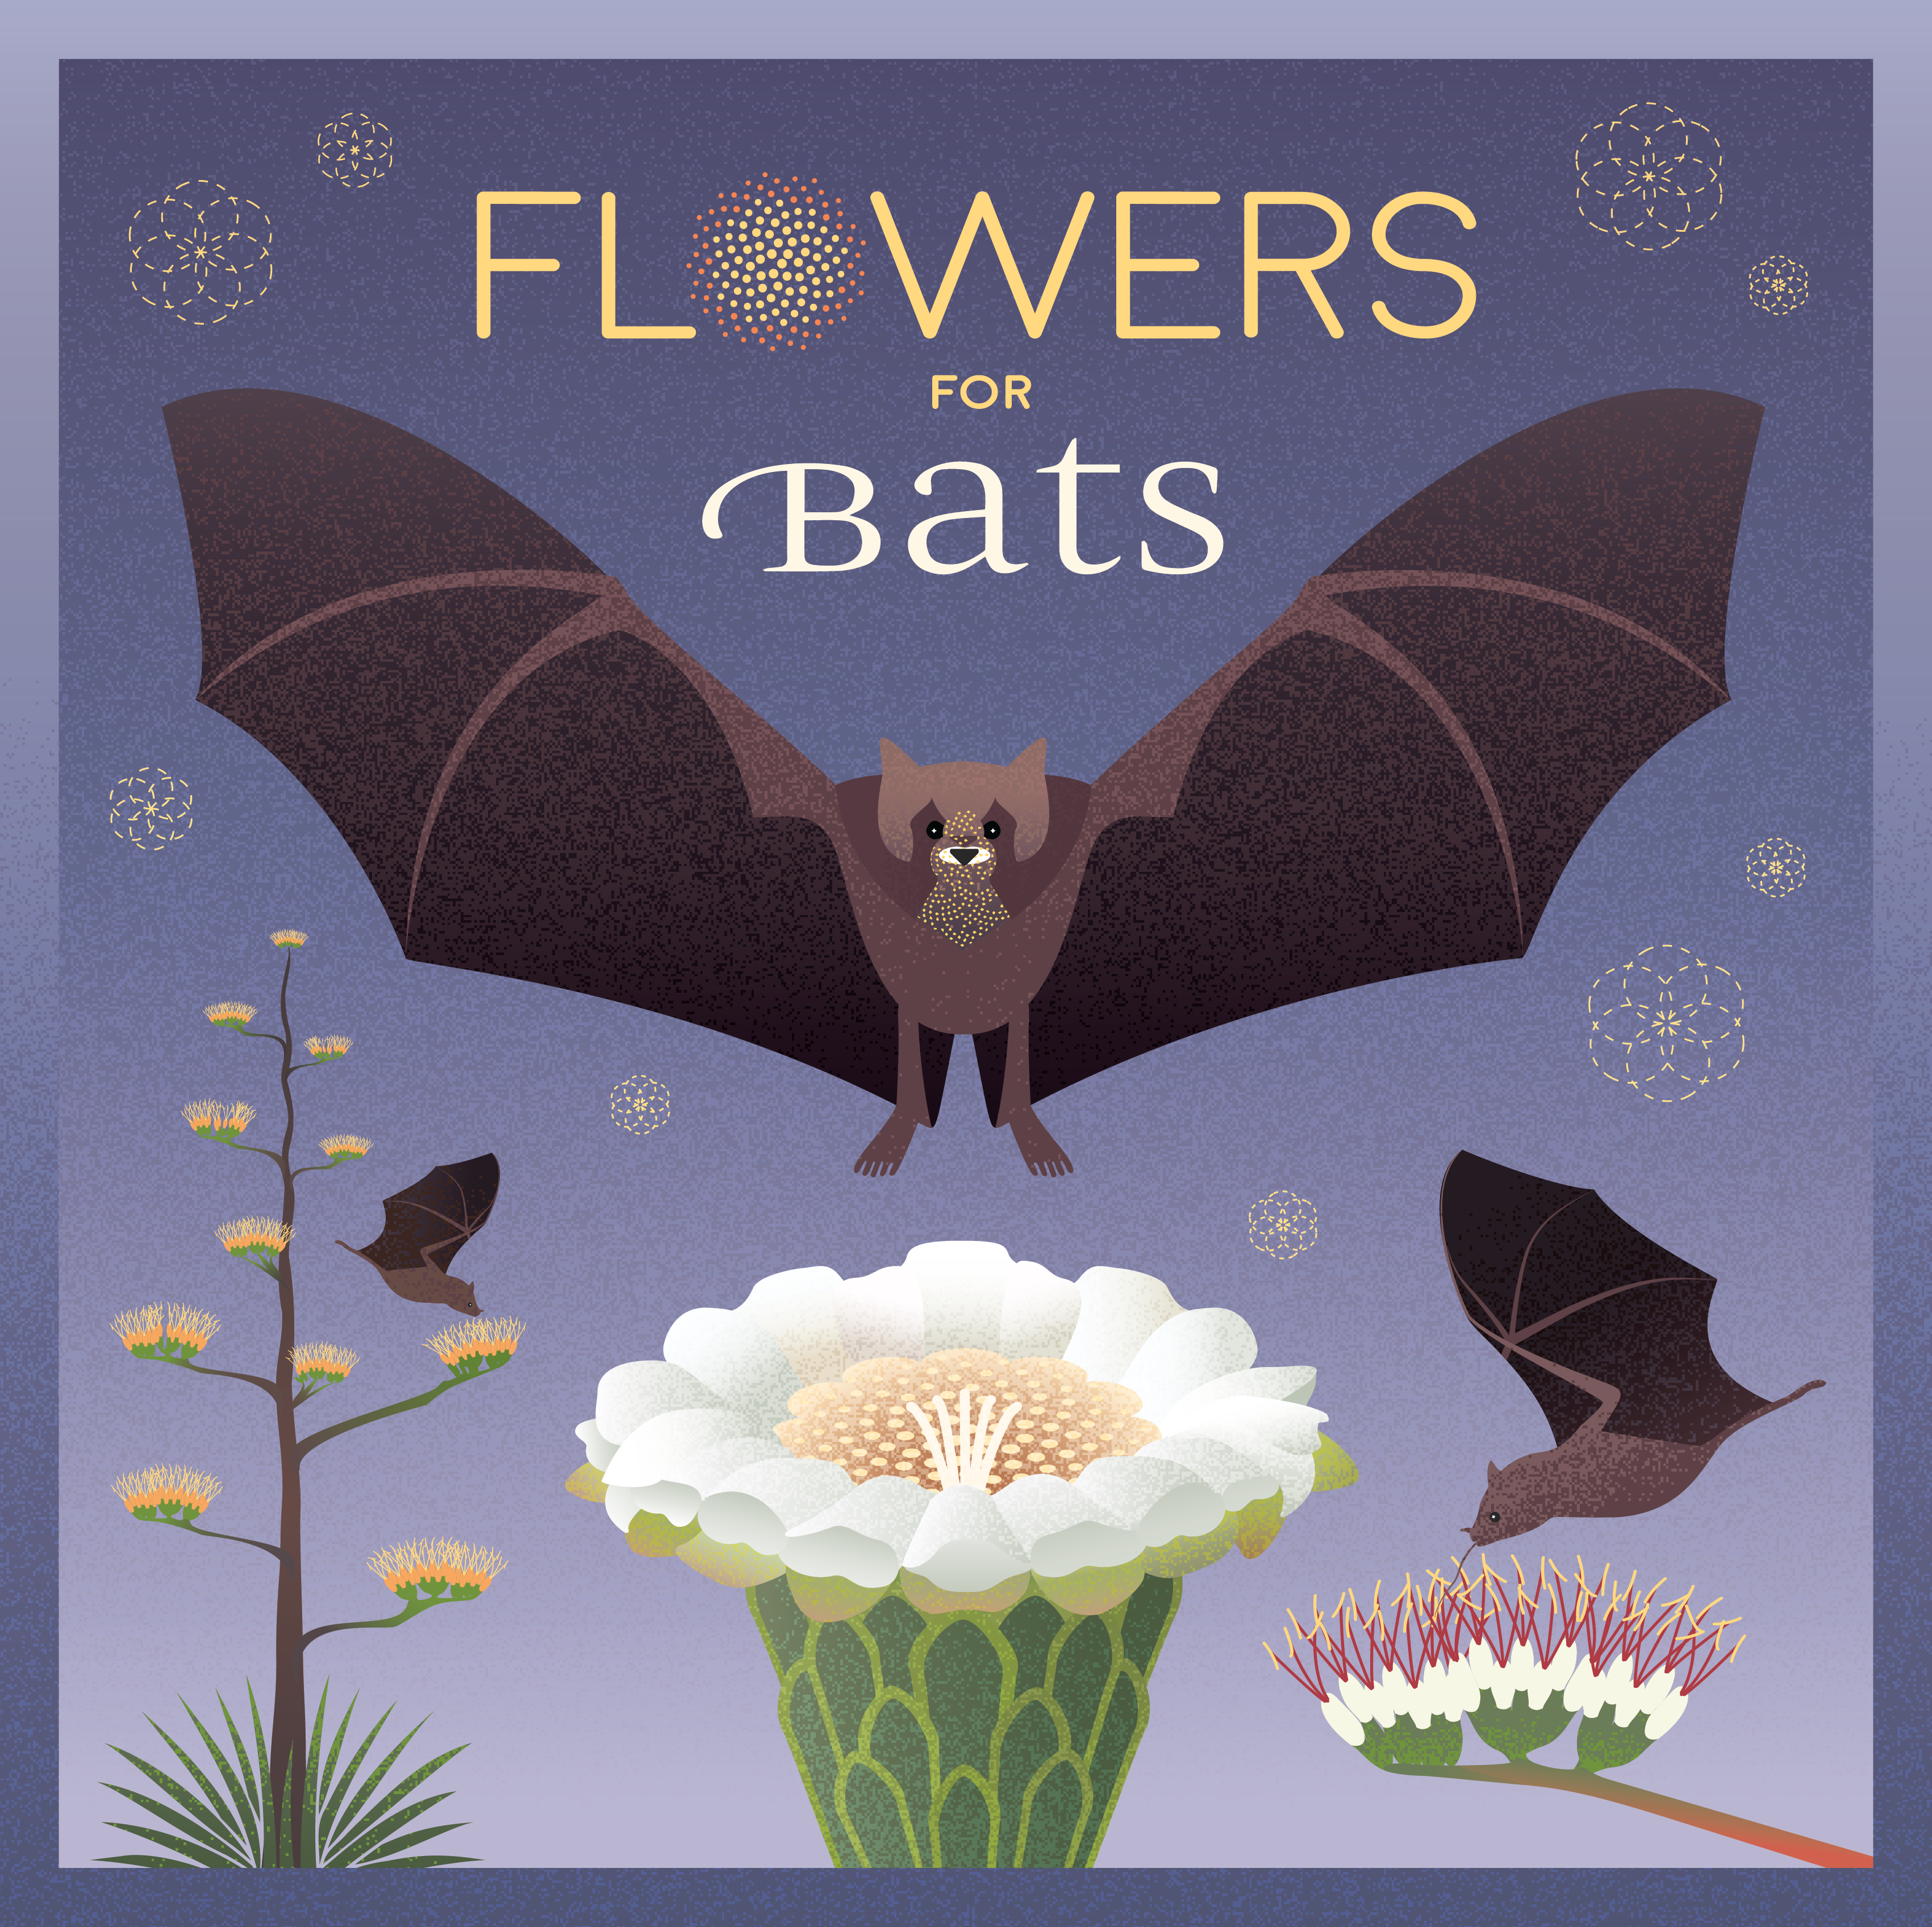 Flowers for Bats campaign logo